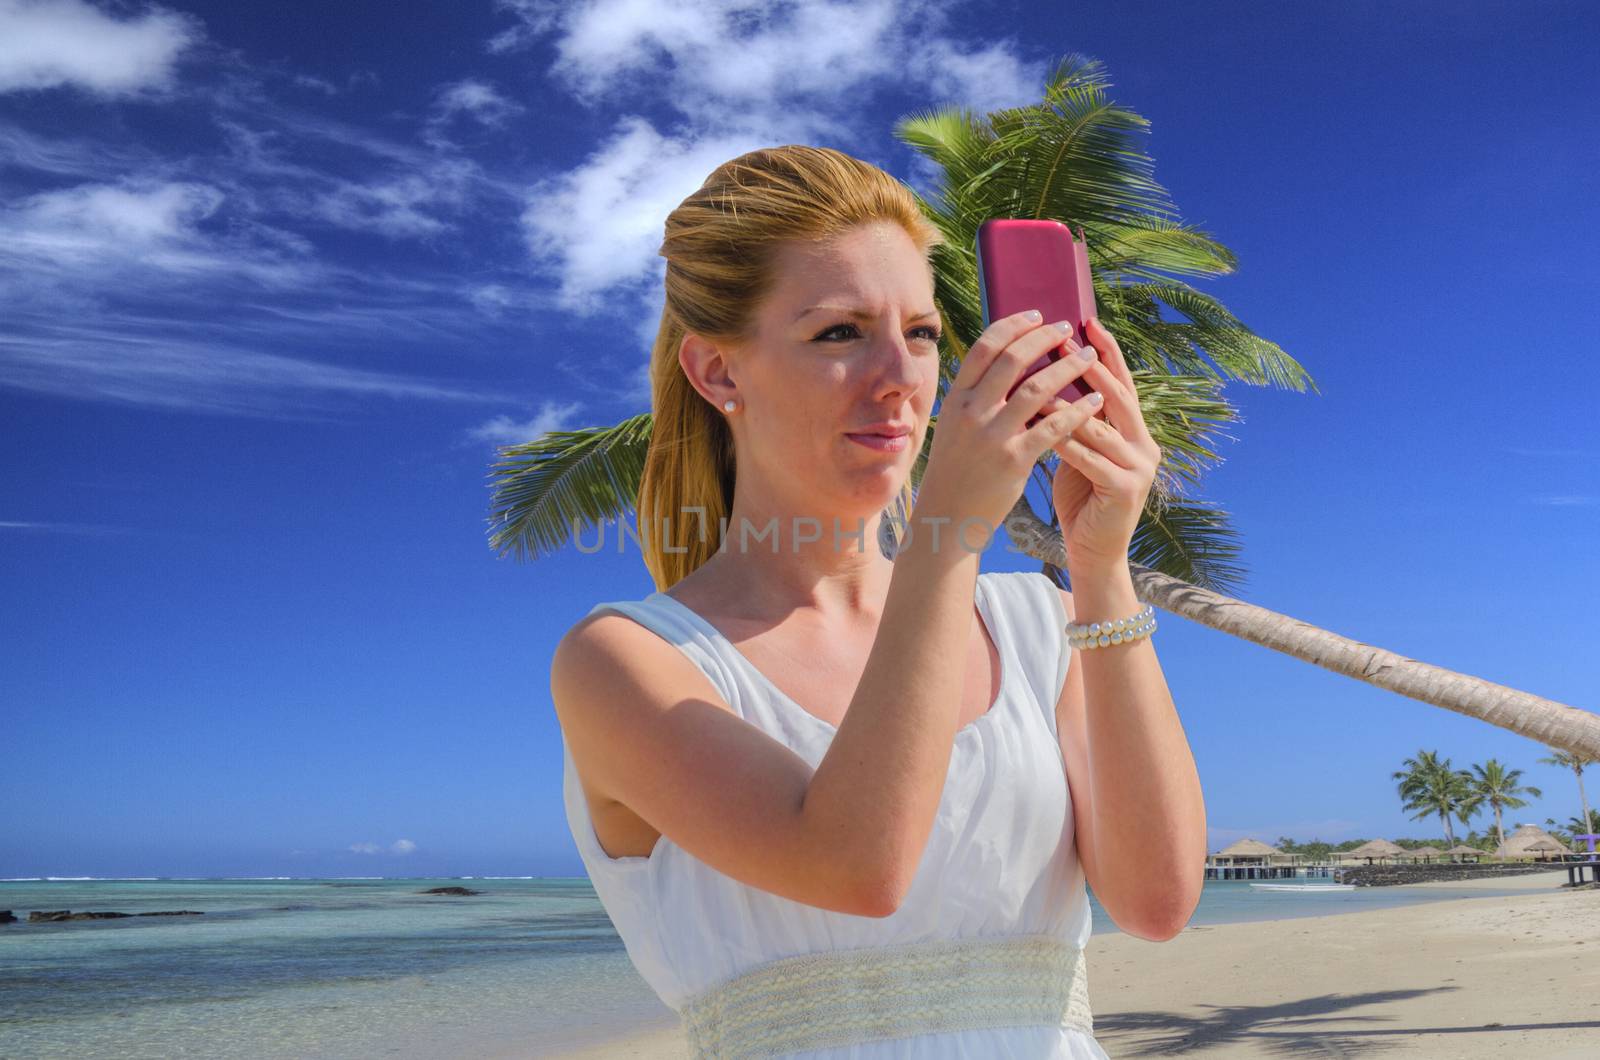 Selfie on beach by JFsPic